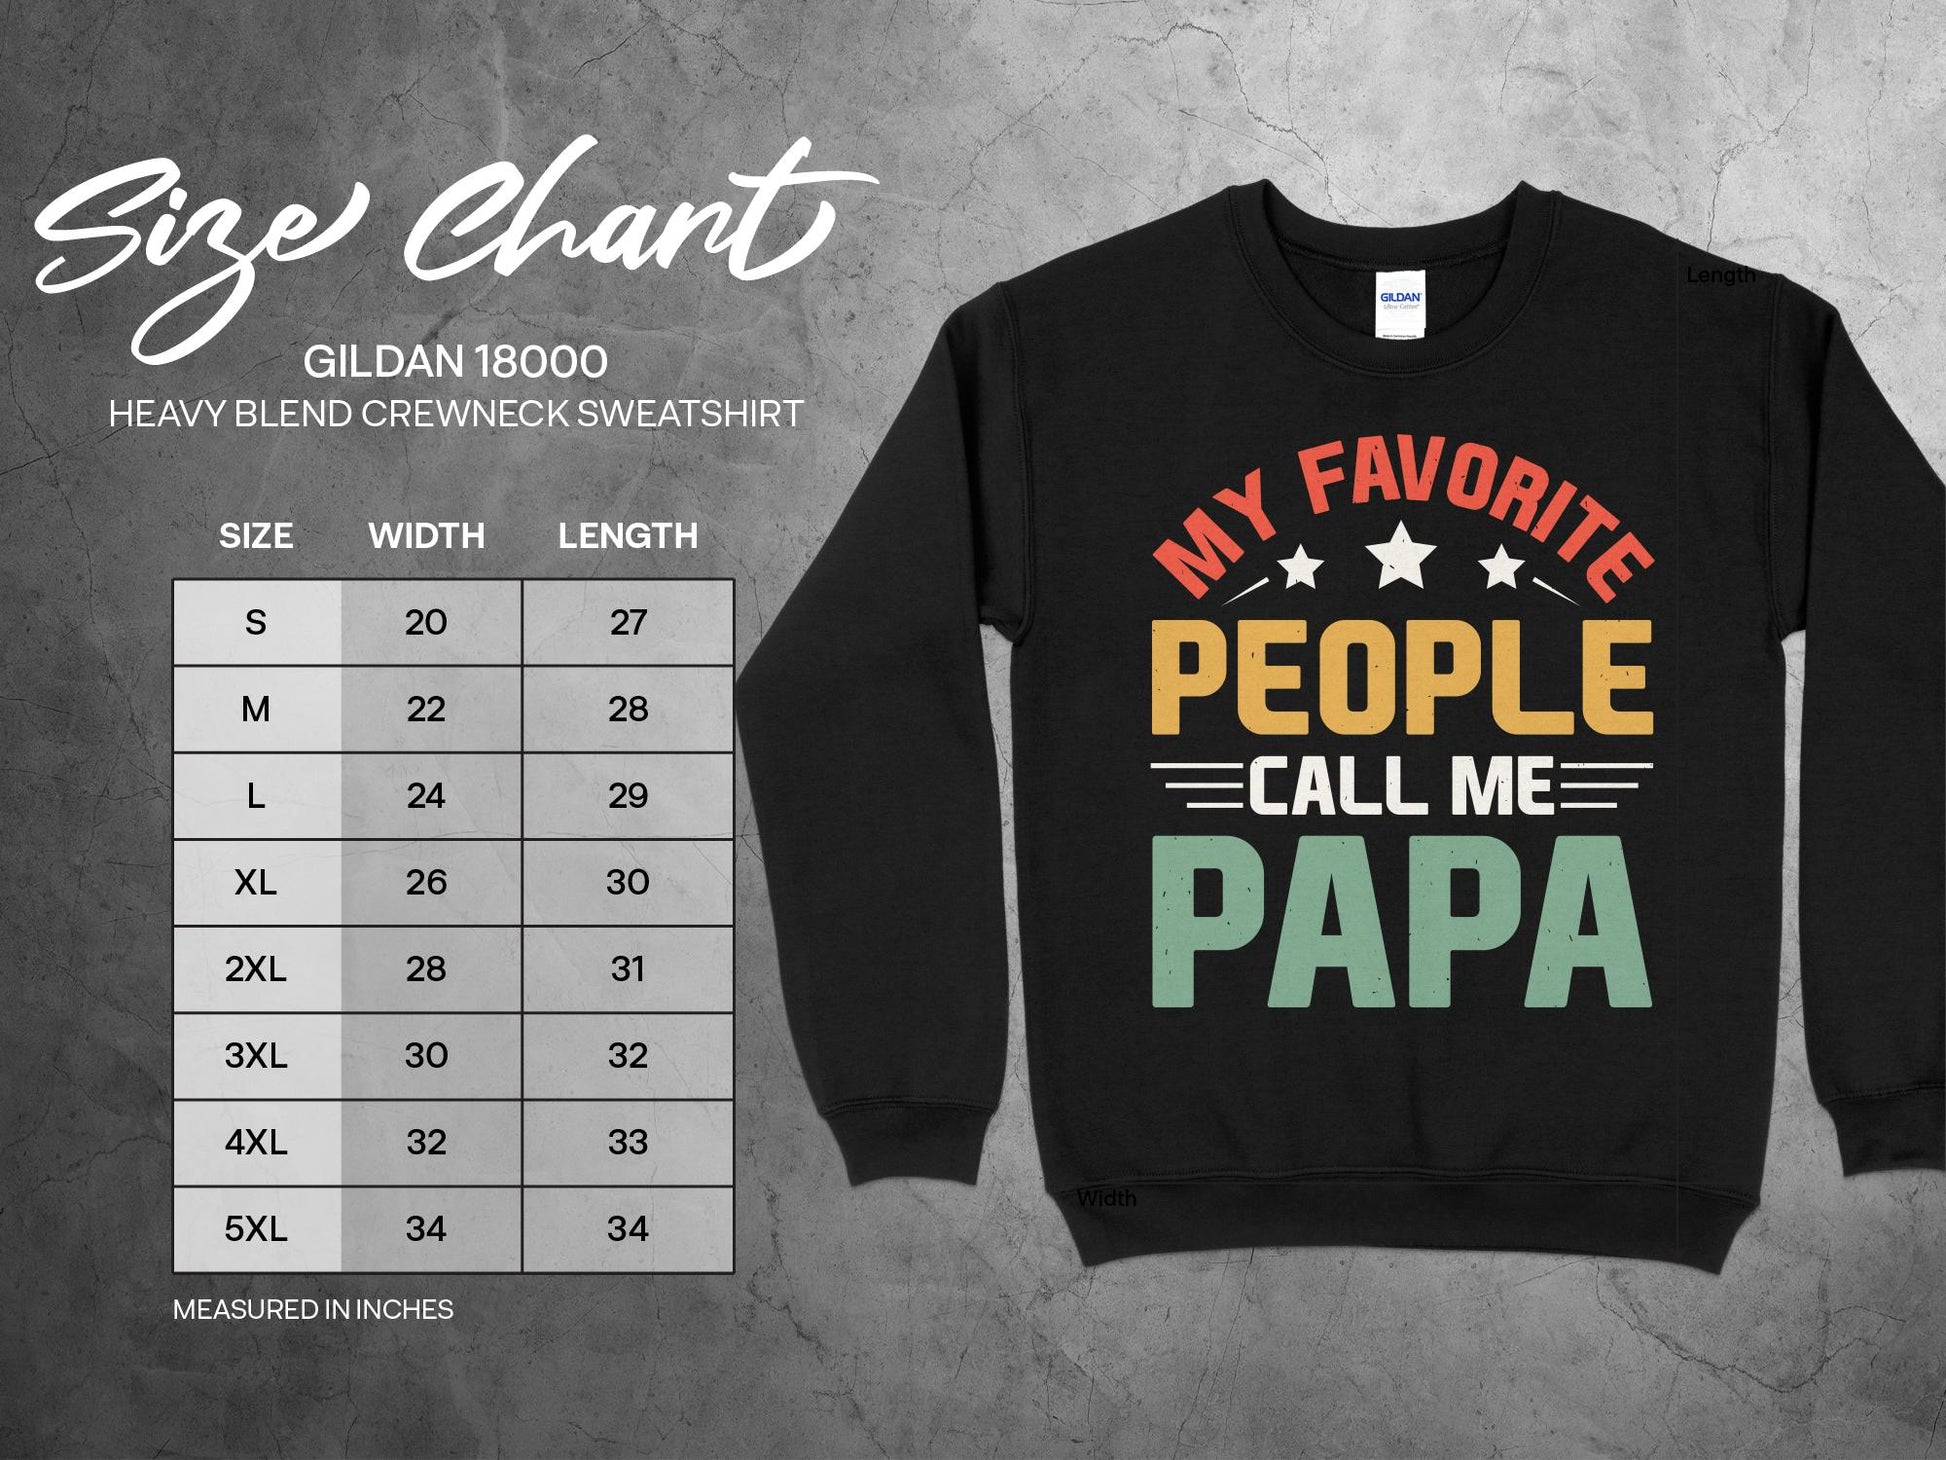 My Favorite People Call Me Papa Sweatshirt, sizing chart